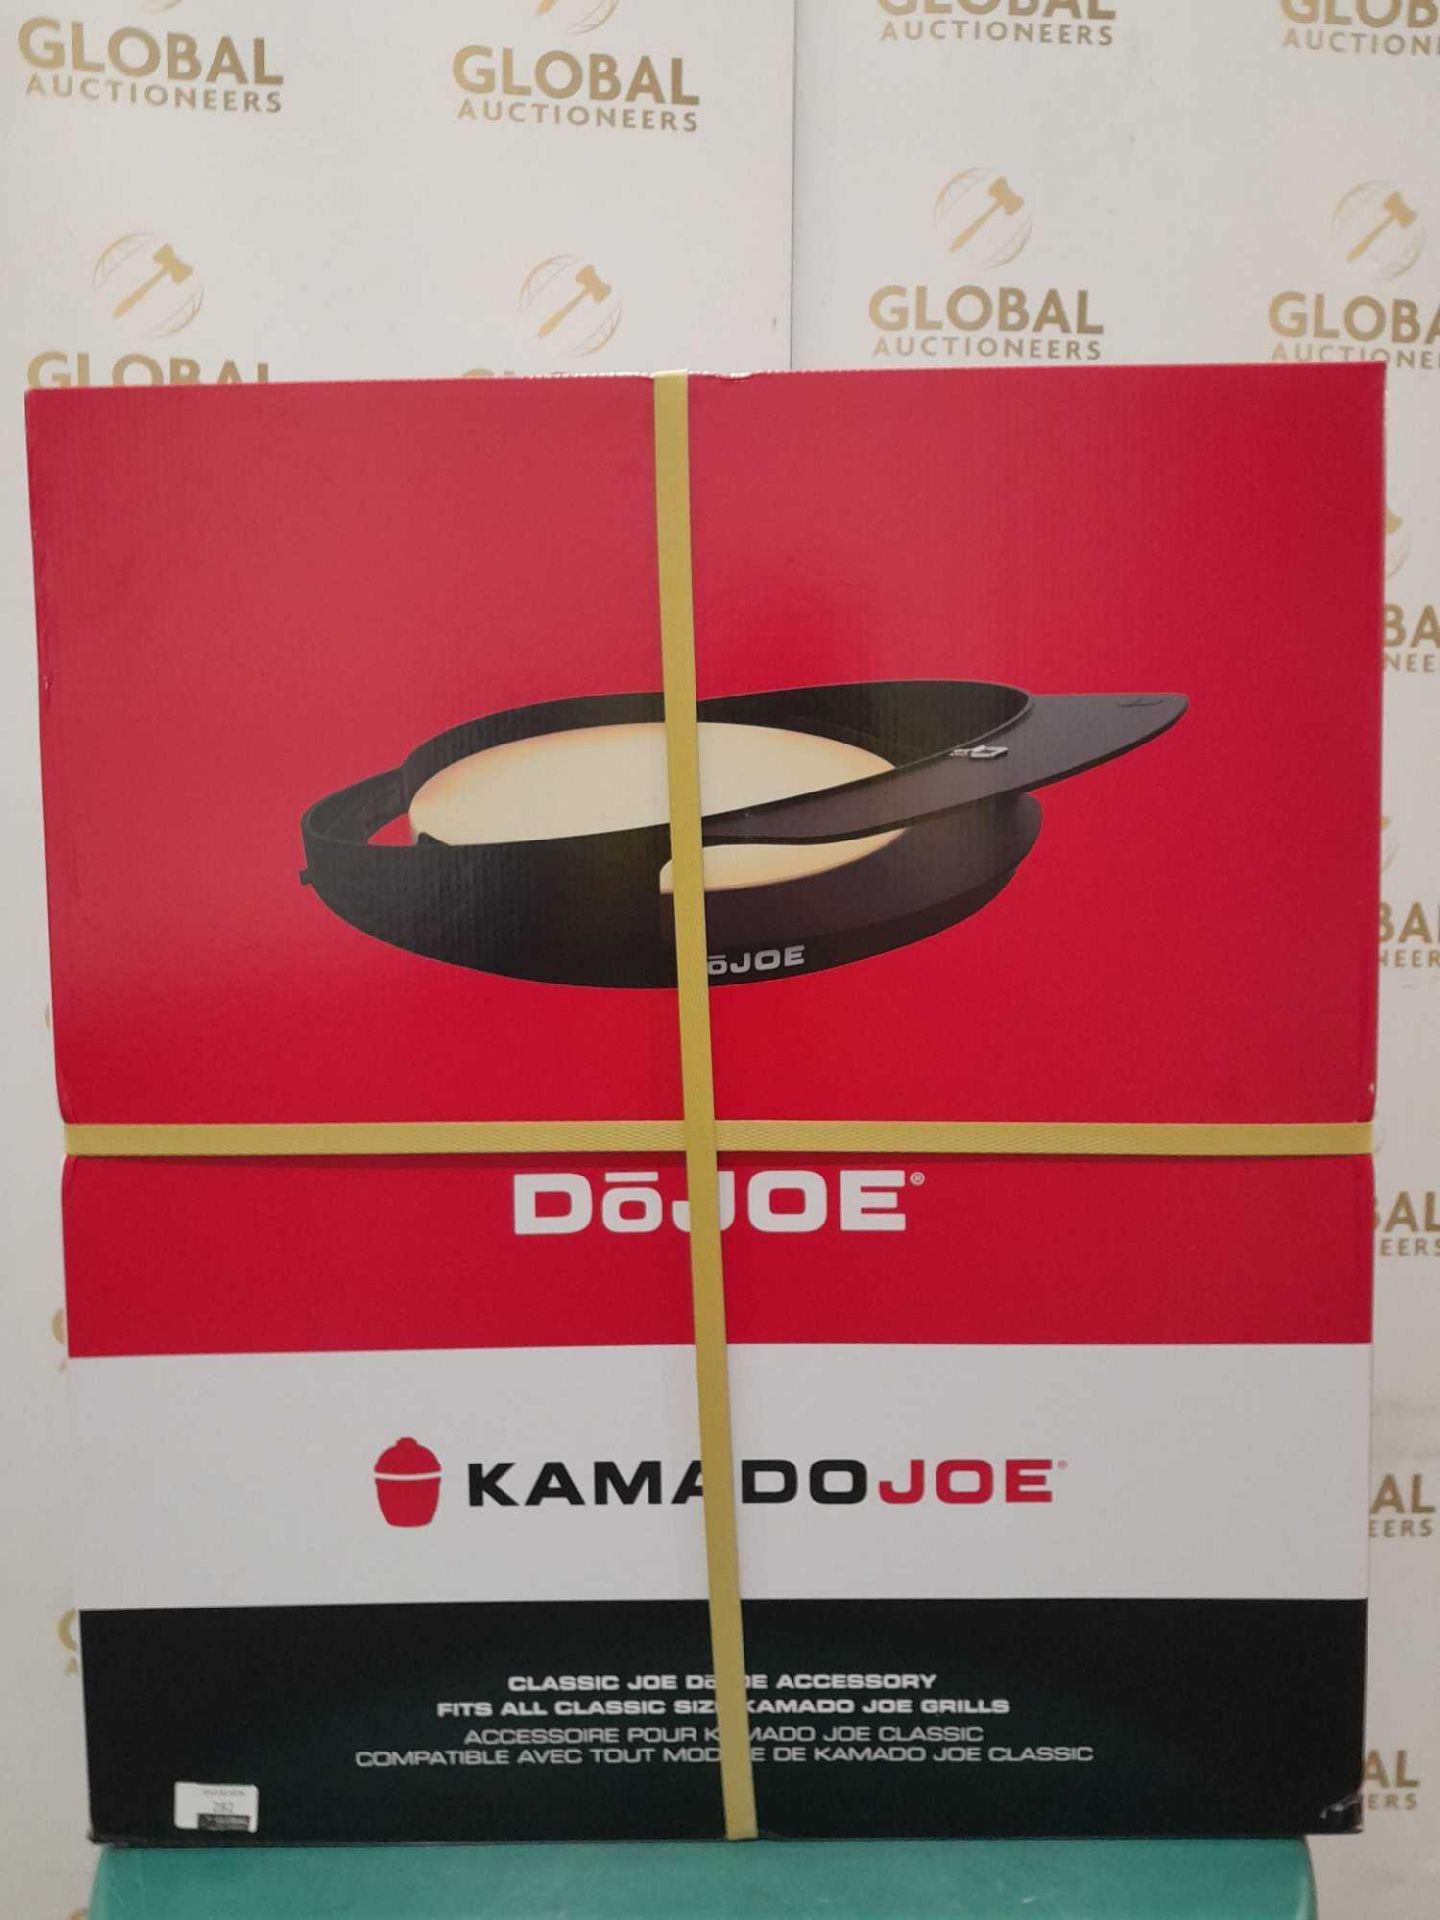 RRP £290 Boxed Kamado Joe Kj-Dj Dojoe Classic Grill Accessory, Black, 5.9 In*22.25 In*25.0 In - Image 2 of 2